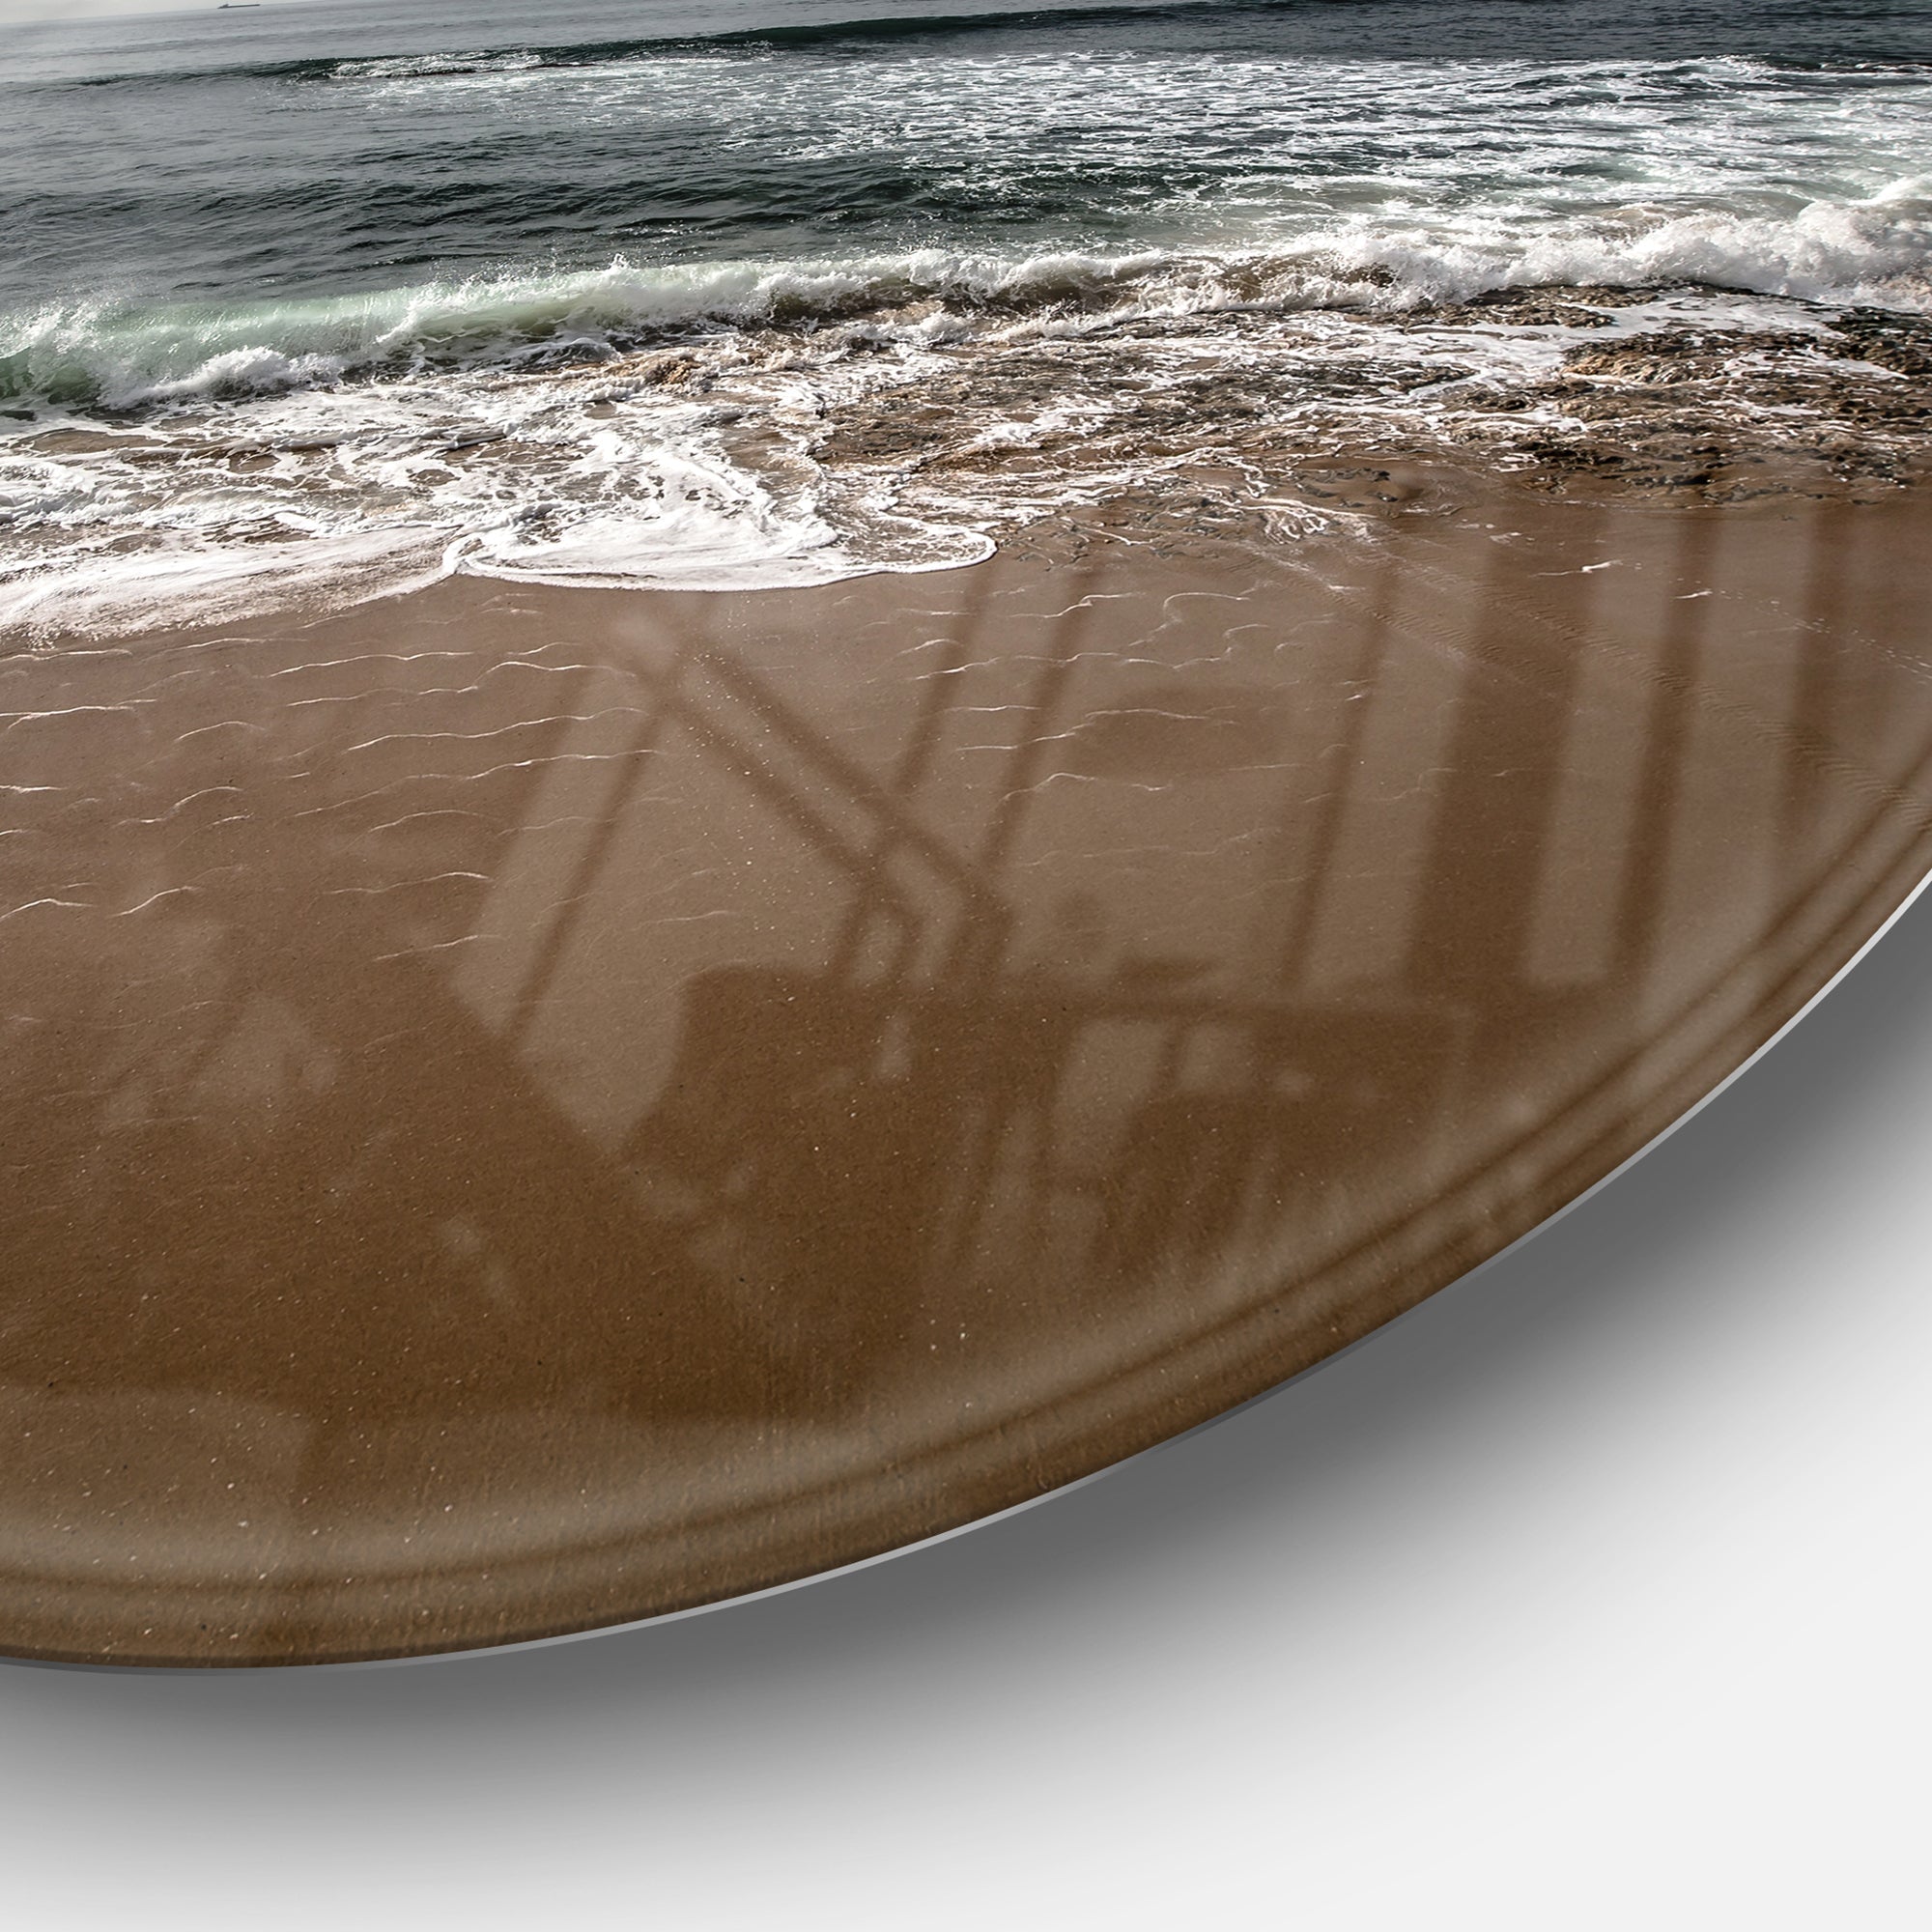 Soft Waves of Sea on Sandy Beach Seashore Metal Circle Wall Art